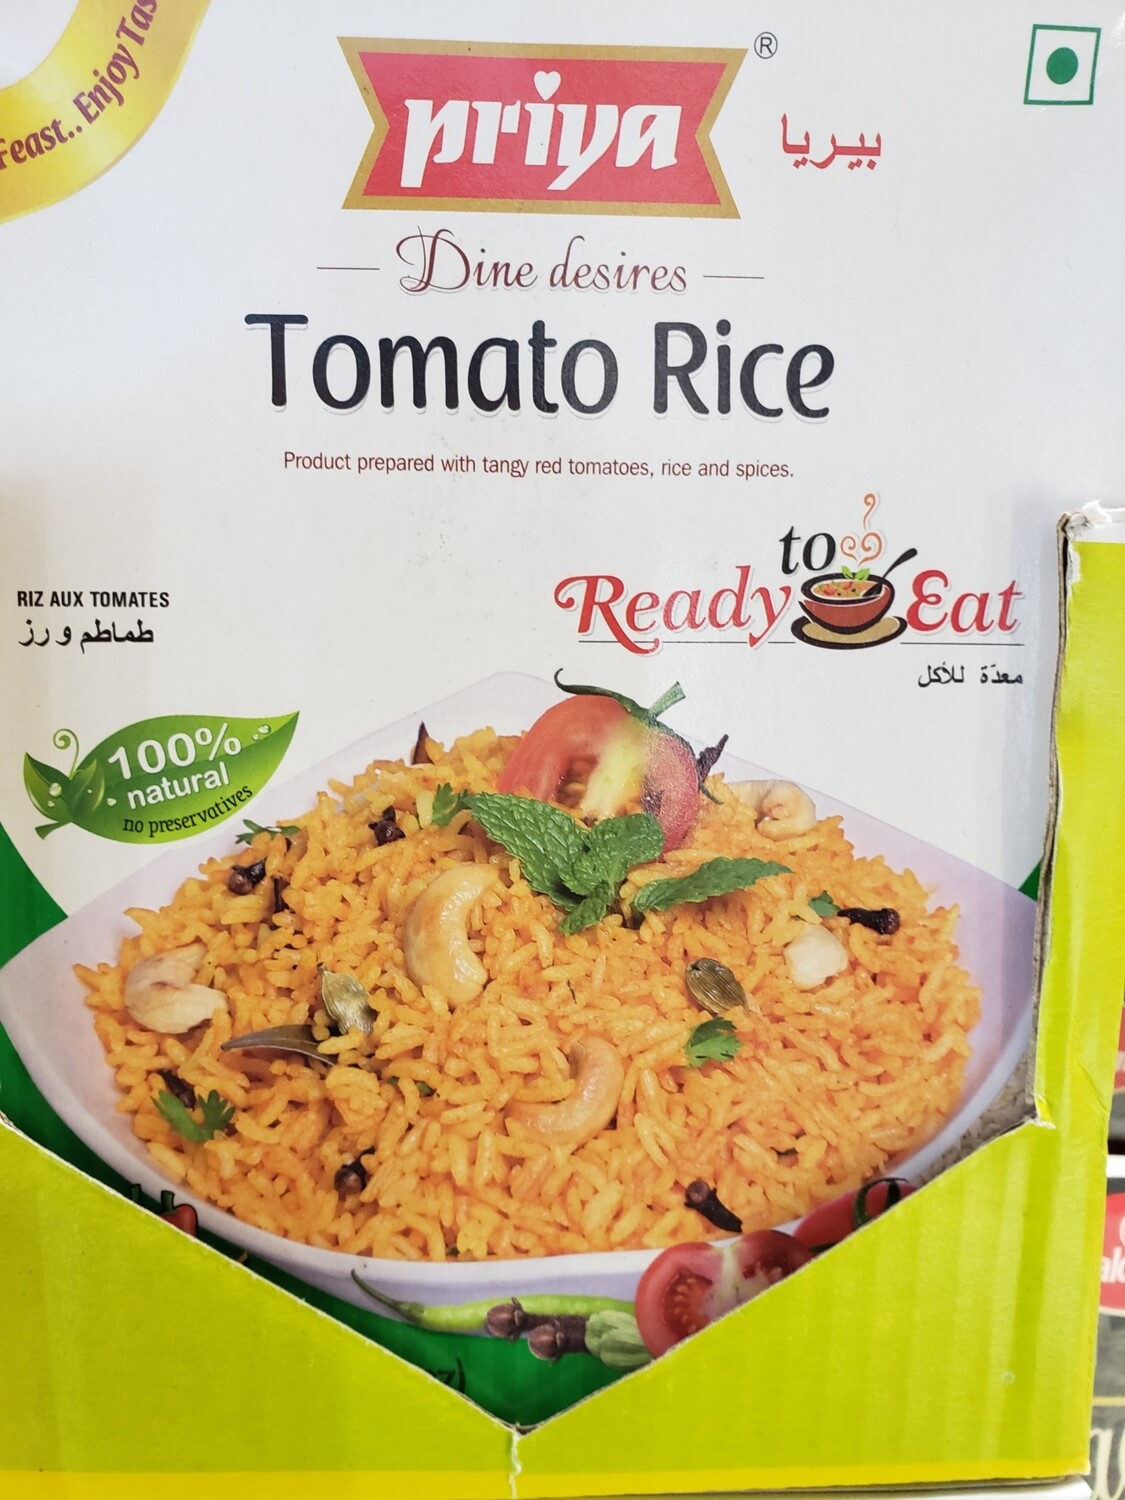 Priya Tomato Rice Ready To Eat 275g